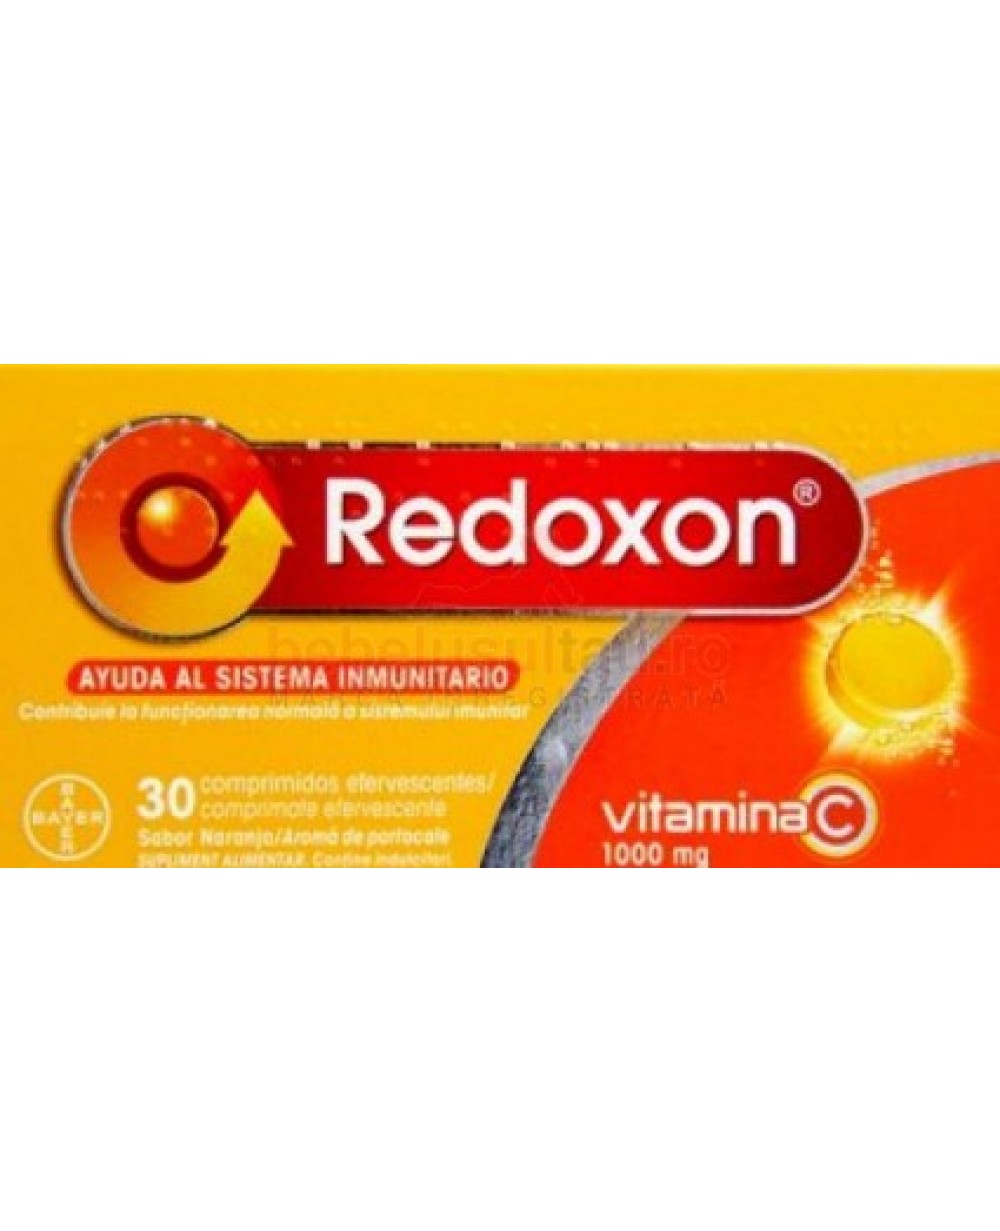 Redoxon vitamina C 1000 mg aroma de portocale, 30 comprimate efervescente, Bayer